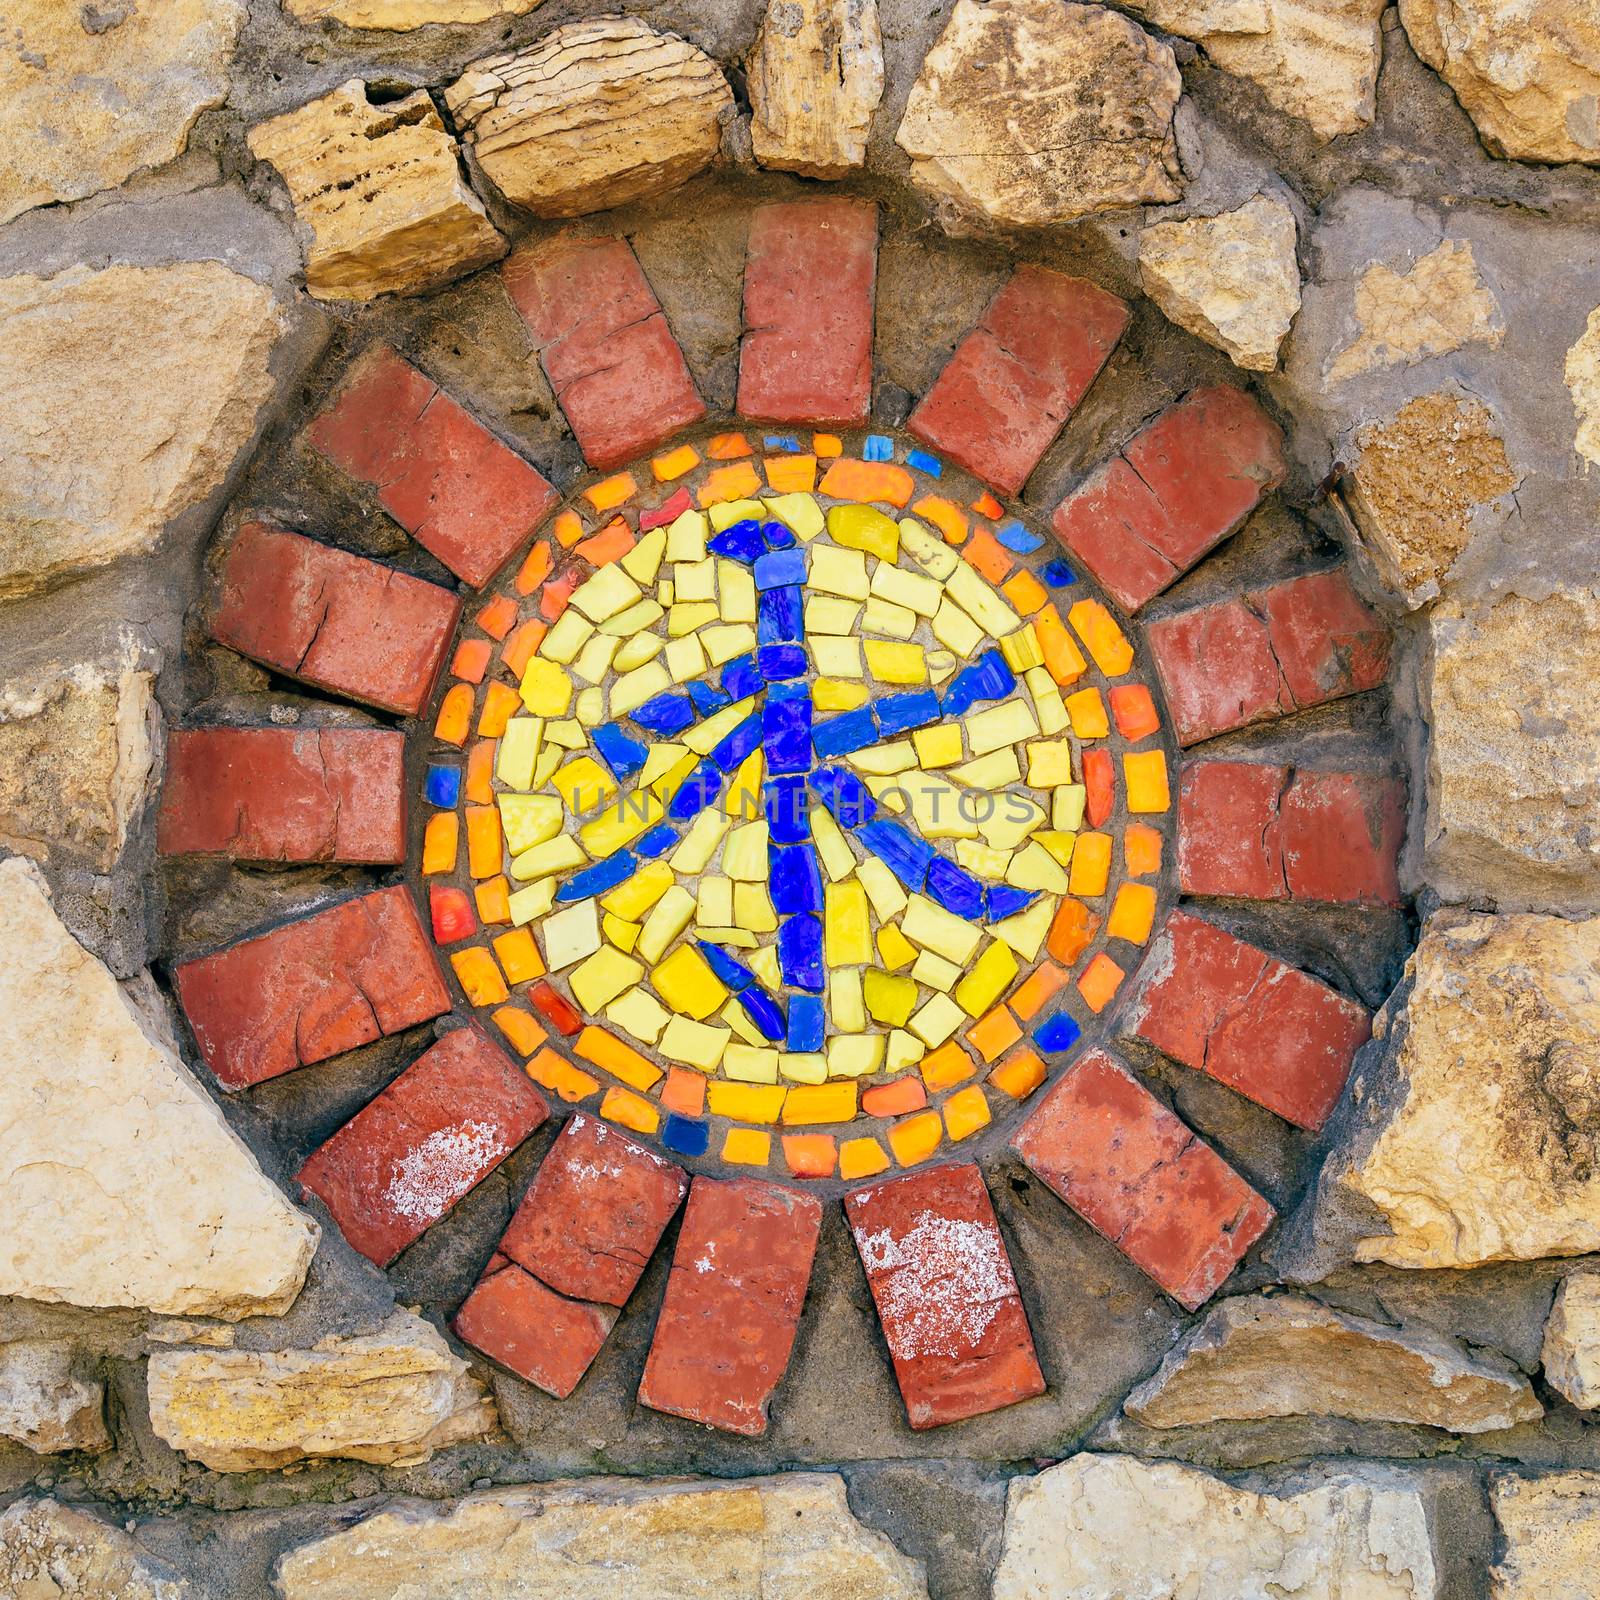 Mosaic religious symbol on wall. by Seva_blsv